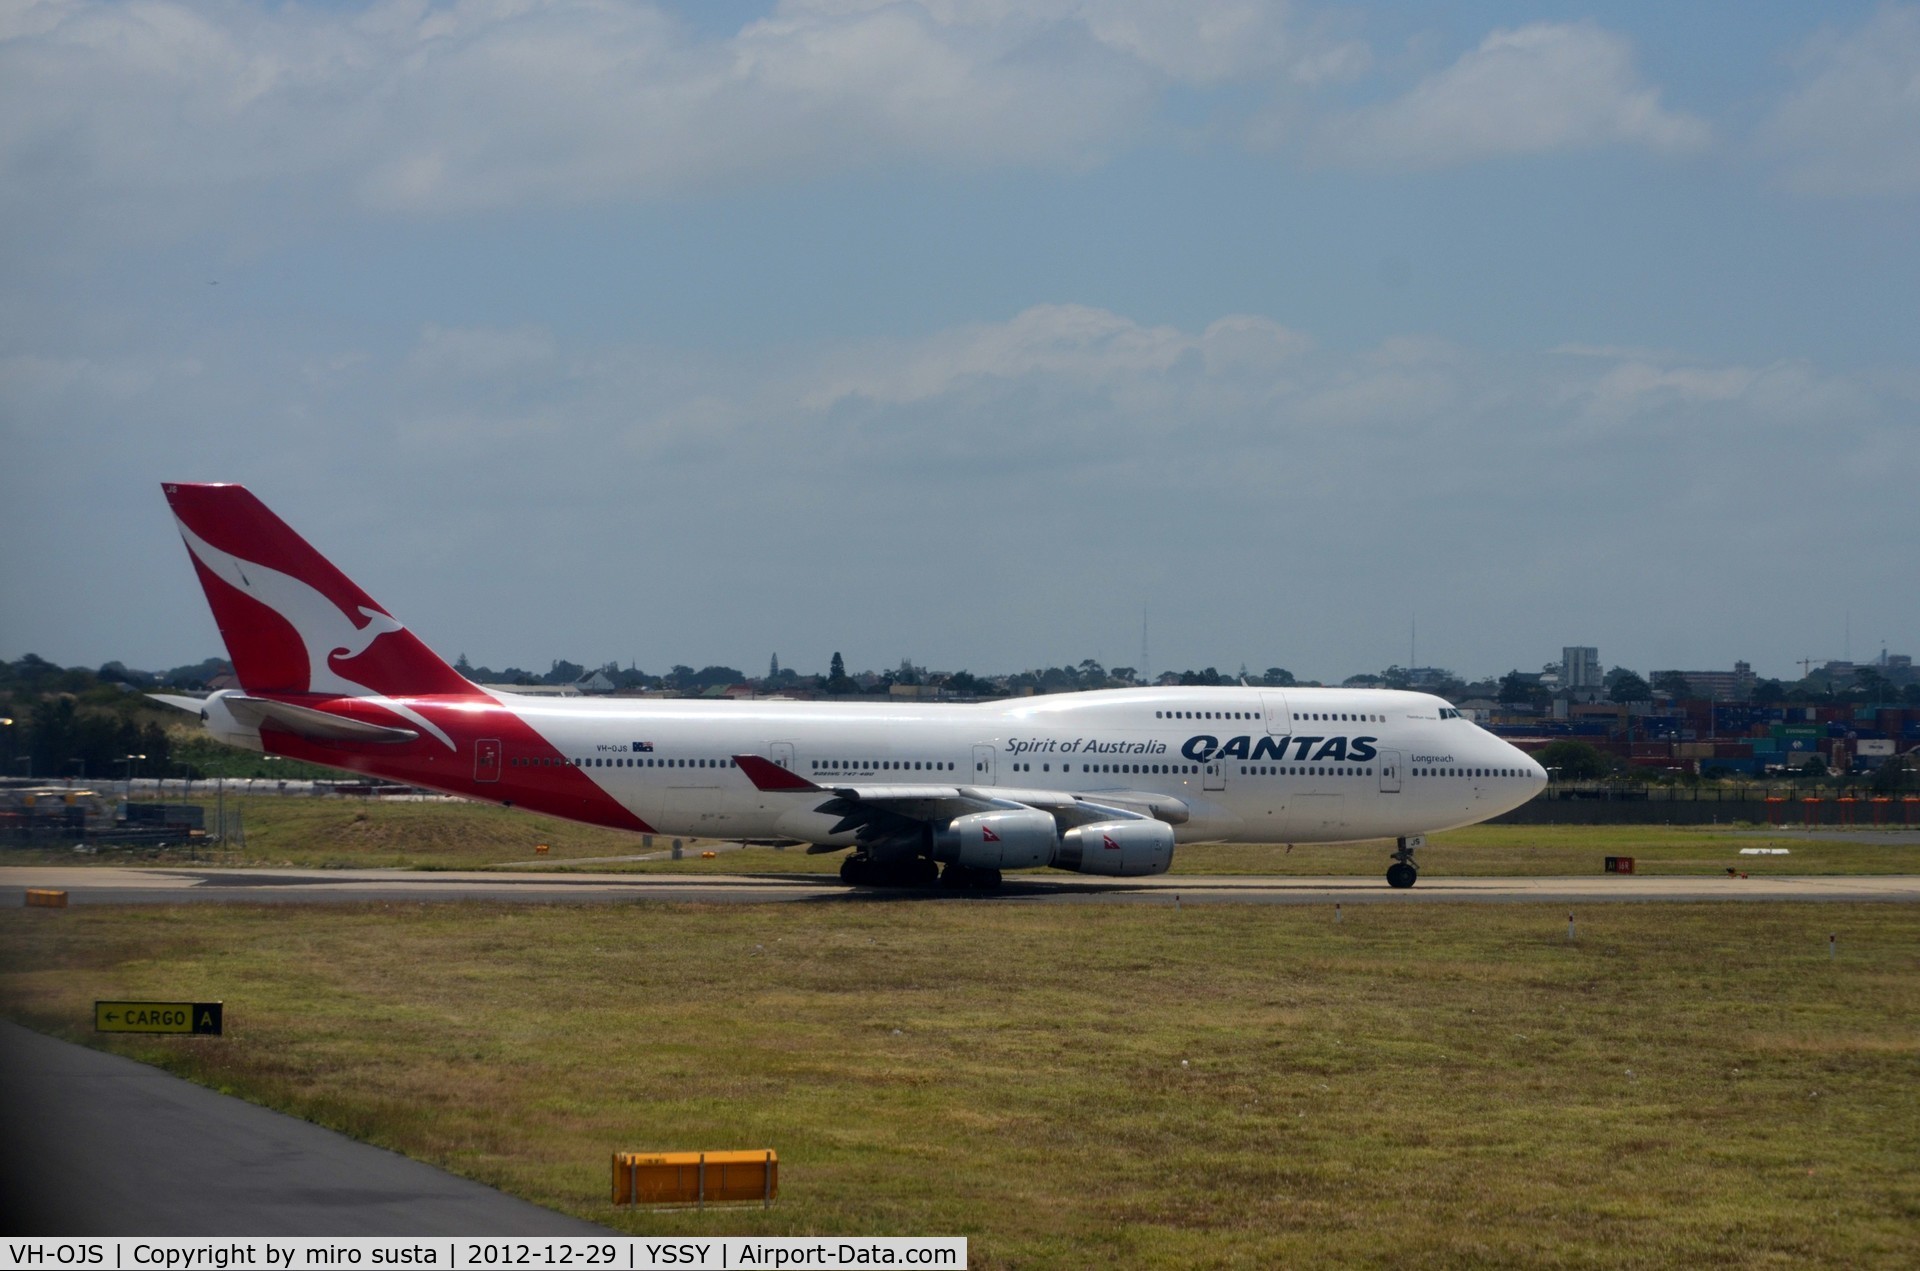 VH-OJS, 1999 Boeing 747-438 C/N 25564, Qantas  International Boeing 747-400 at Sydney Kingsford Smith International airport.